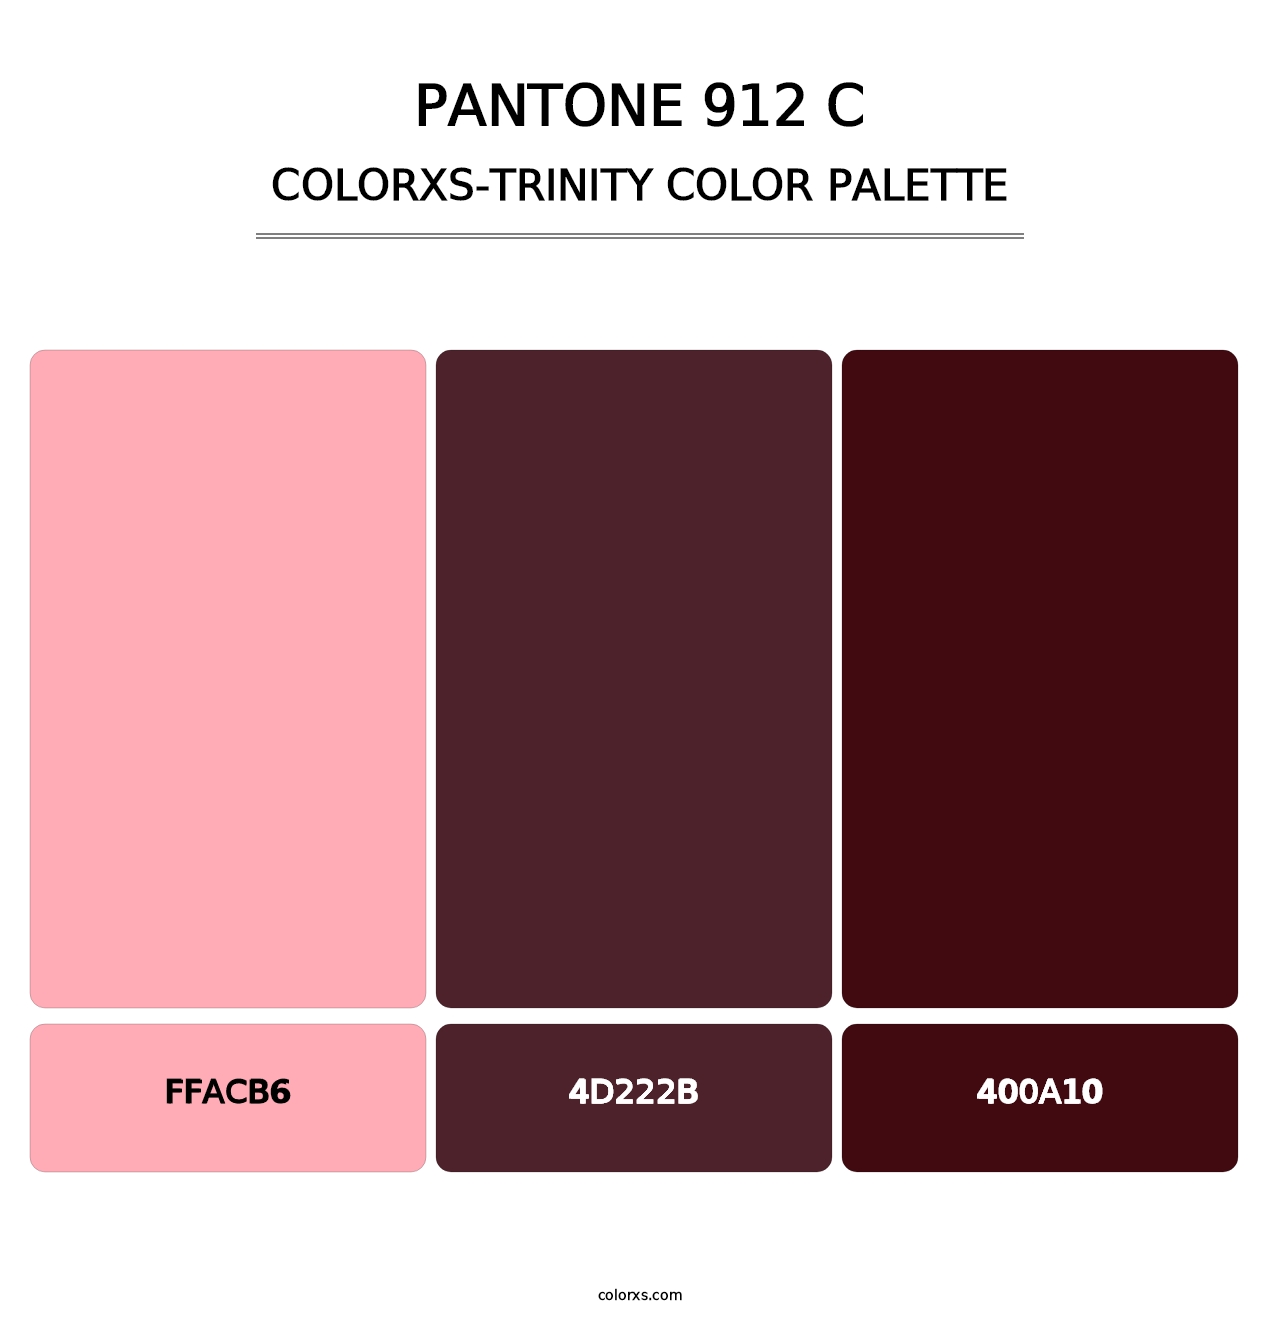 PANTONE 912 C - Colorxs Trinity Palette